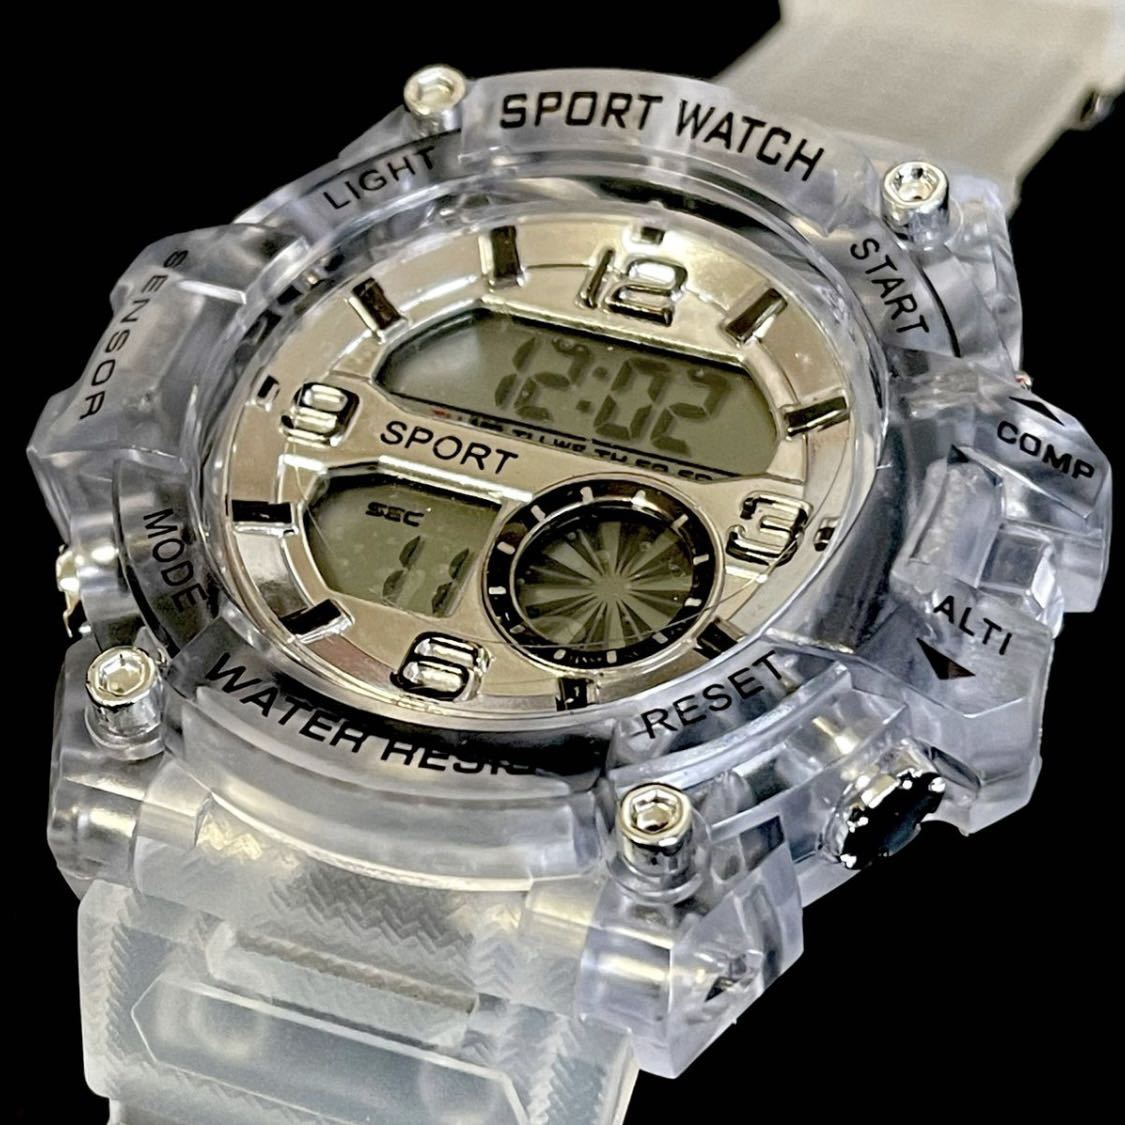  new goods SPROT WATCH digital watch Bick face men's wristwatch clear 